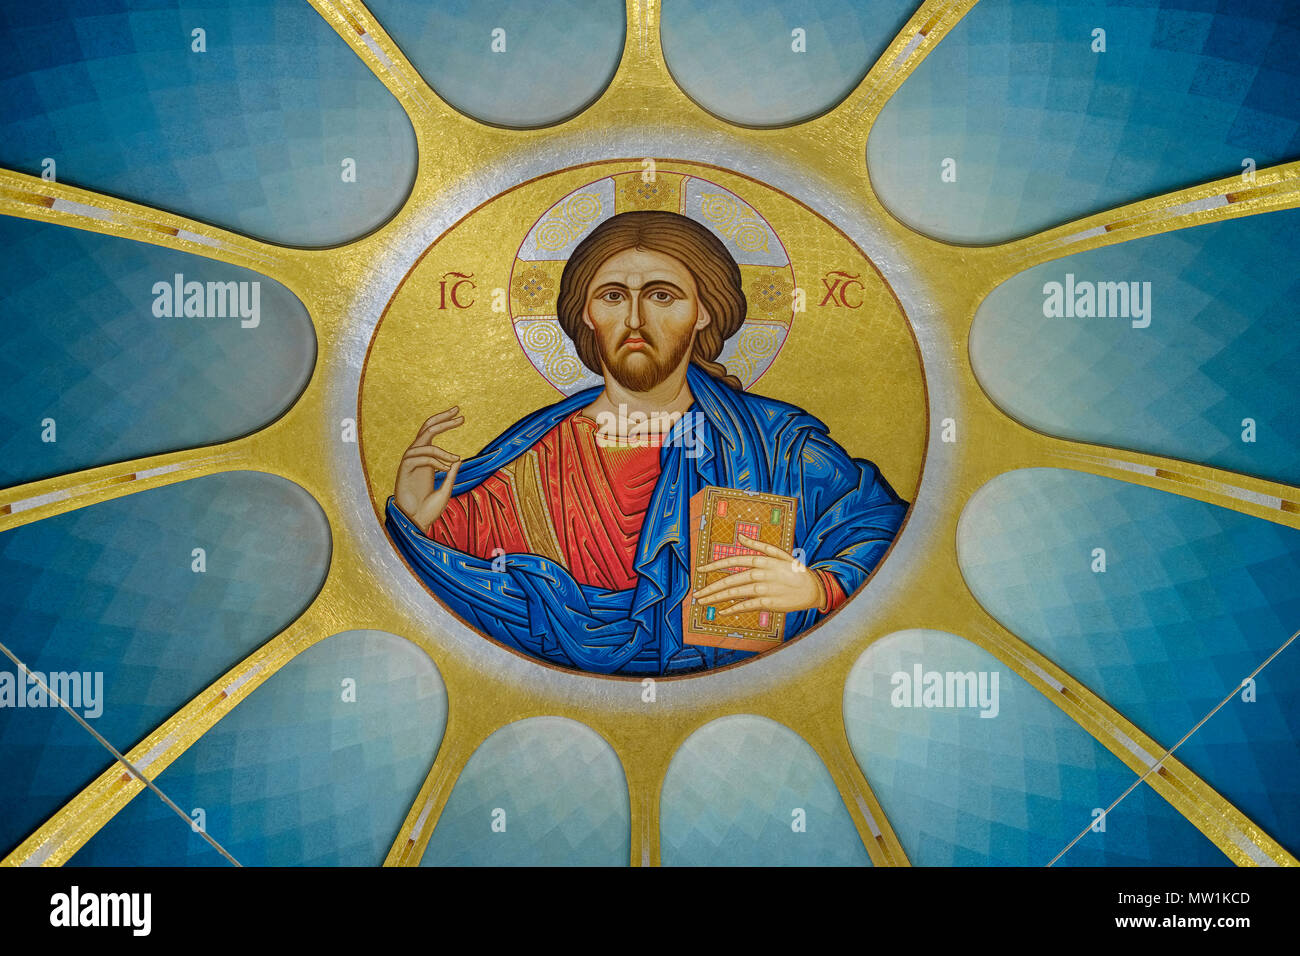 Cristo pantocrator pintura fotografías e imágenes de alta resolución - Alamy